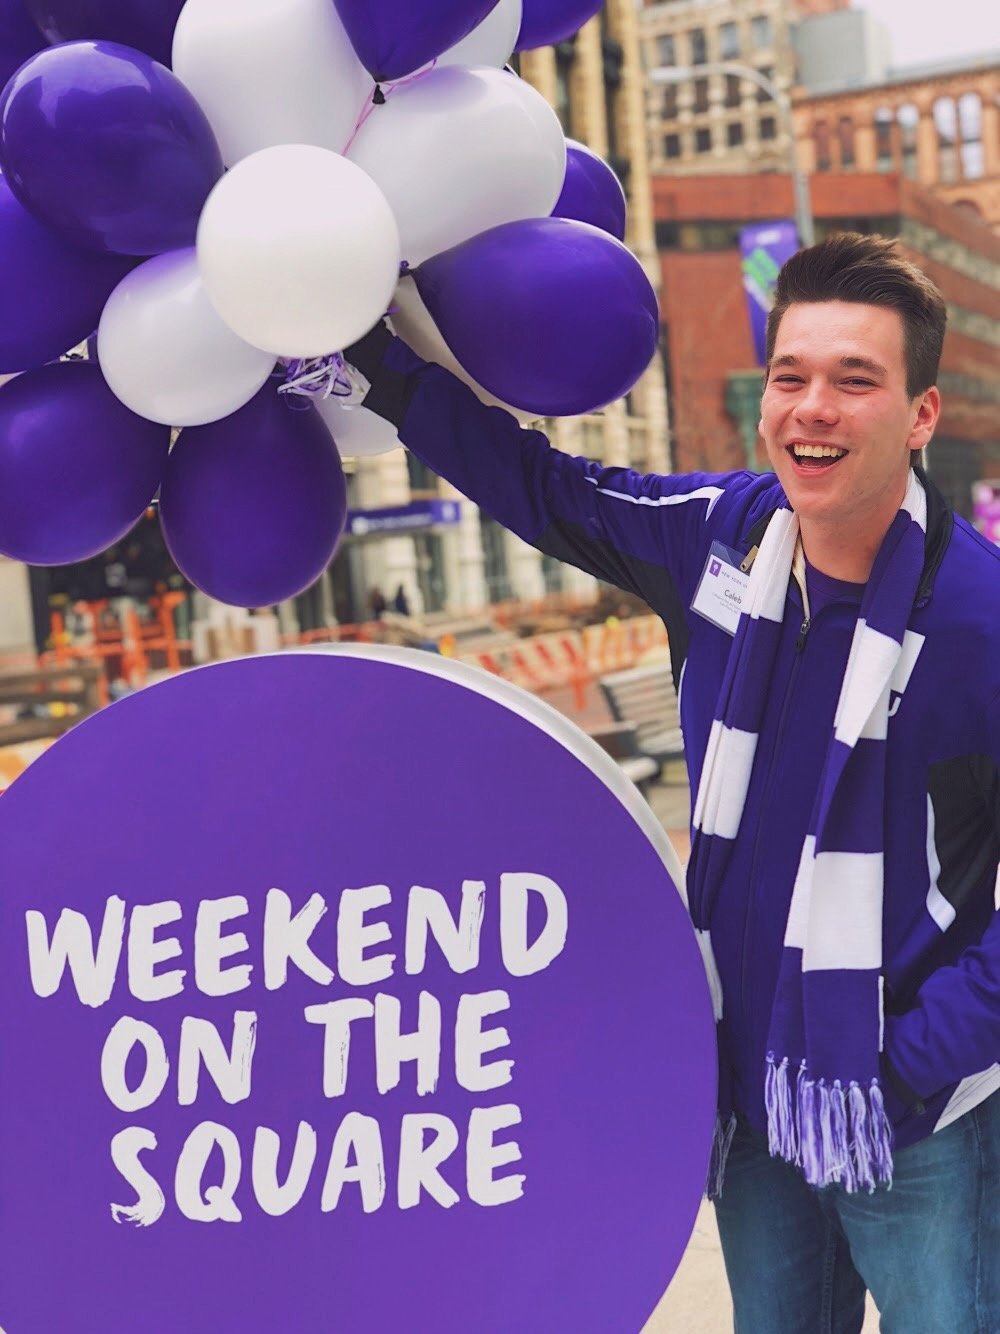 NYU student Caleb Martin helps students choosing NYU while wearing NYU attire and holding purple and white balloons.